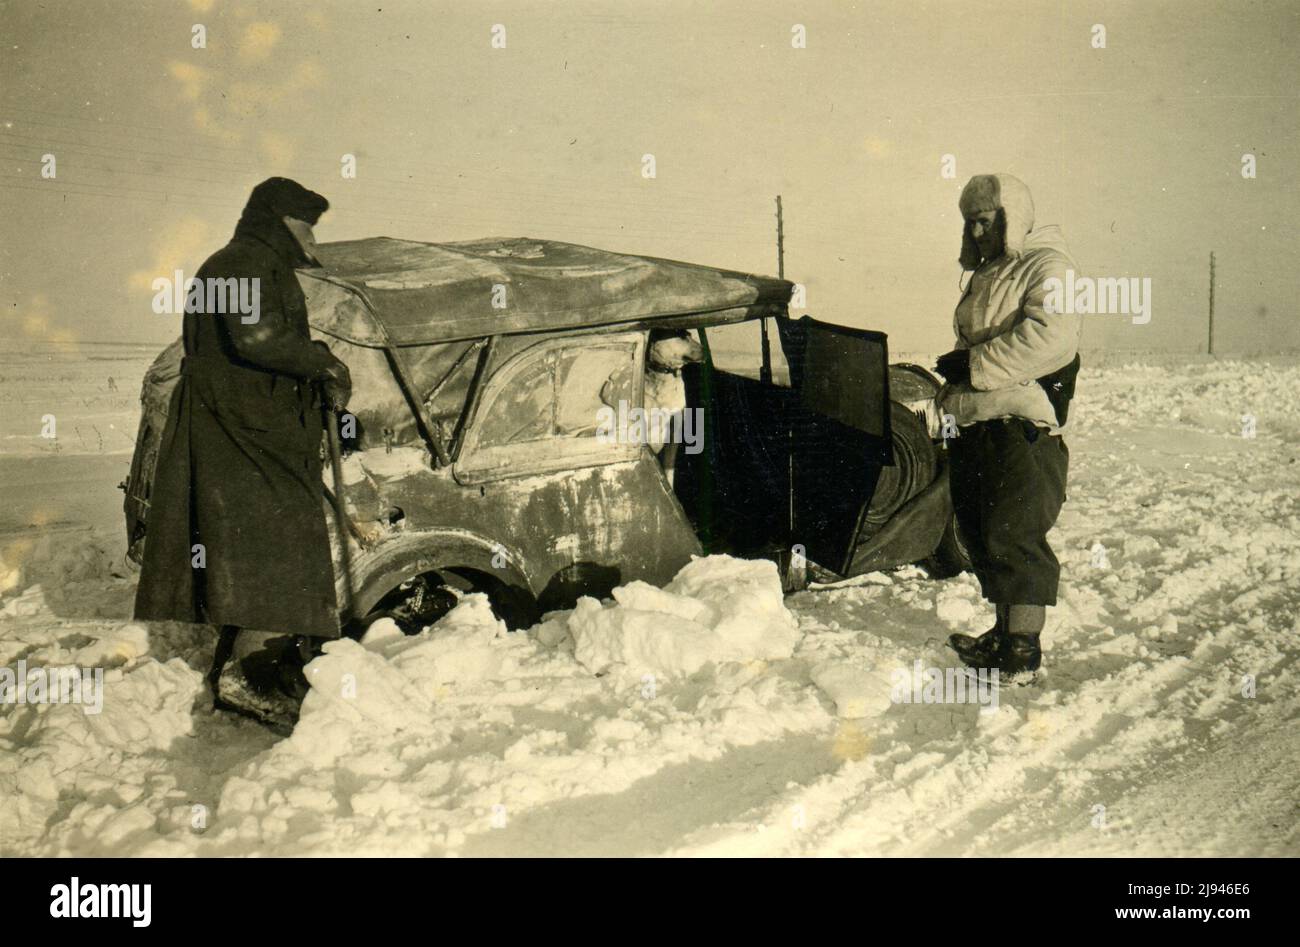 WWII WW2 italian soldiers invades URSS - november 1942 - Operation Barbarossa - near Voronez Russia - car blocked by snow storm - 8 italian army Stock Photo